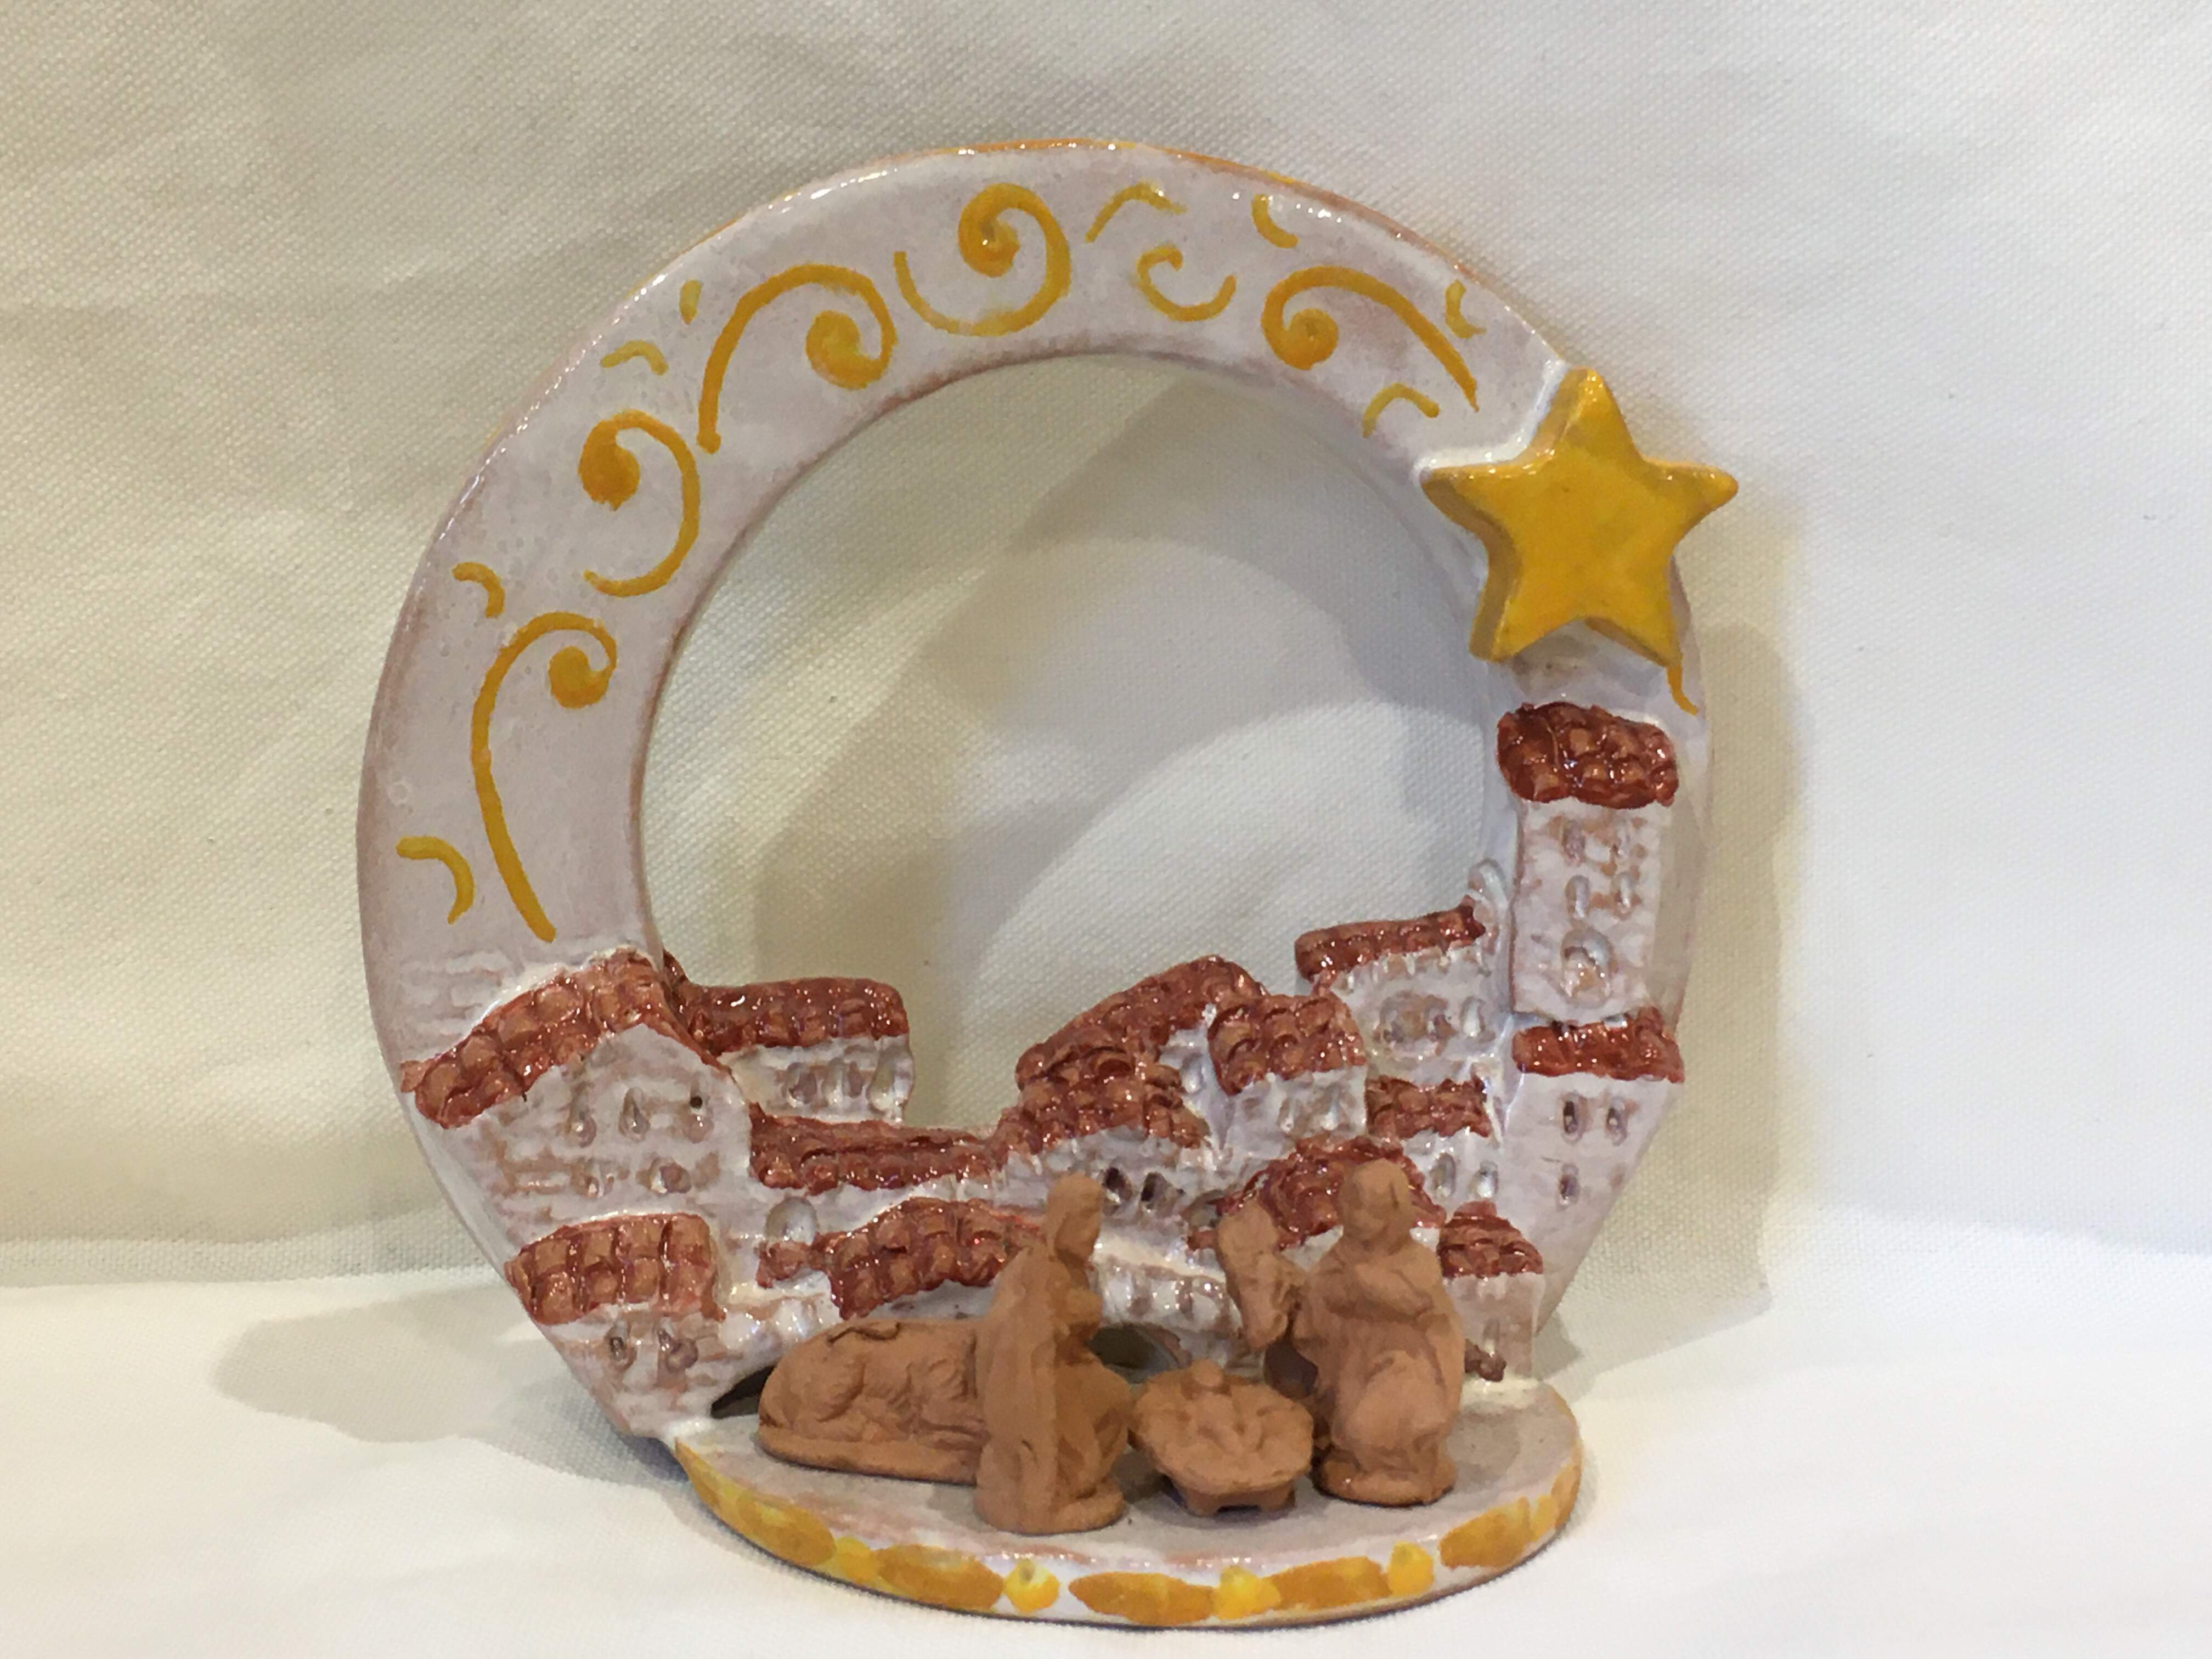 Arch nativity scene